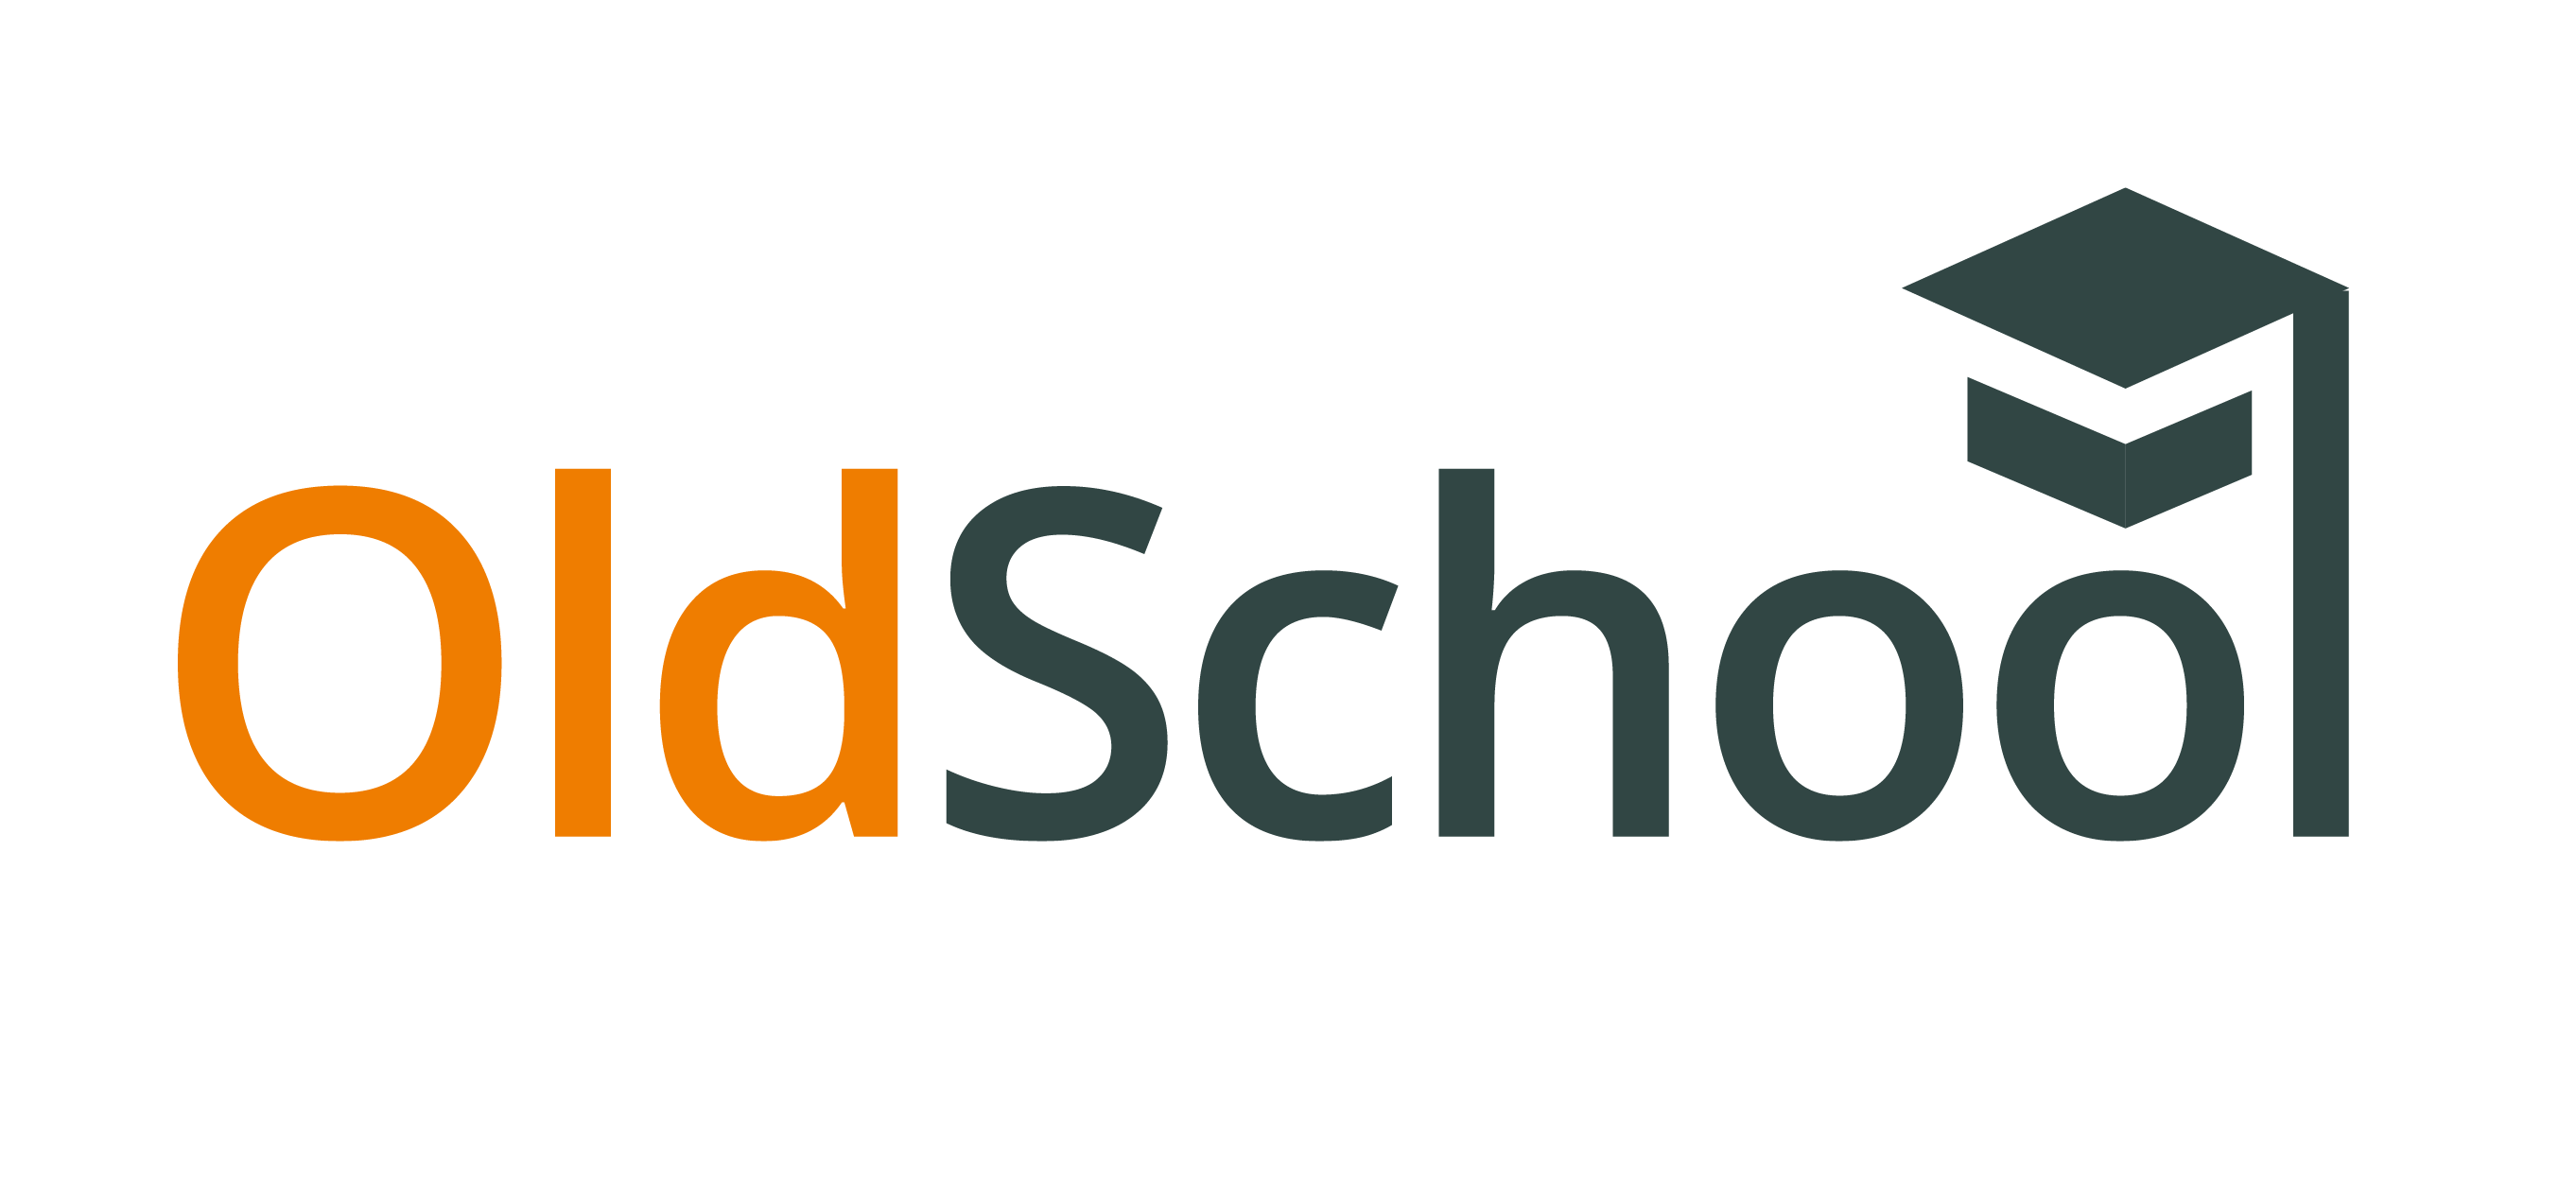 Founding of the e-learning platform “OldSchool”